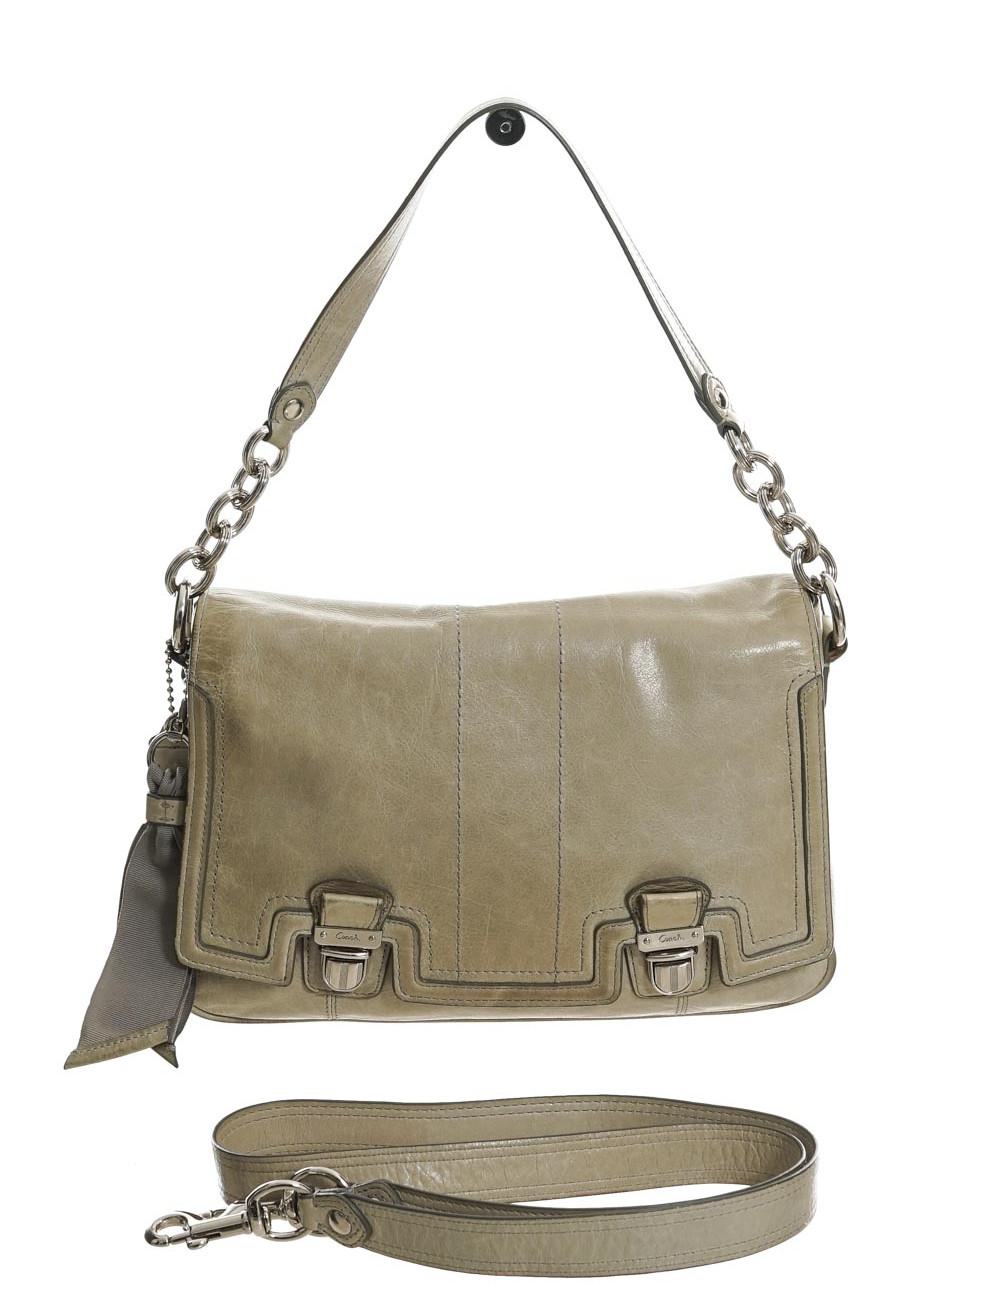 Light grey leather satchel crossbody bag